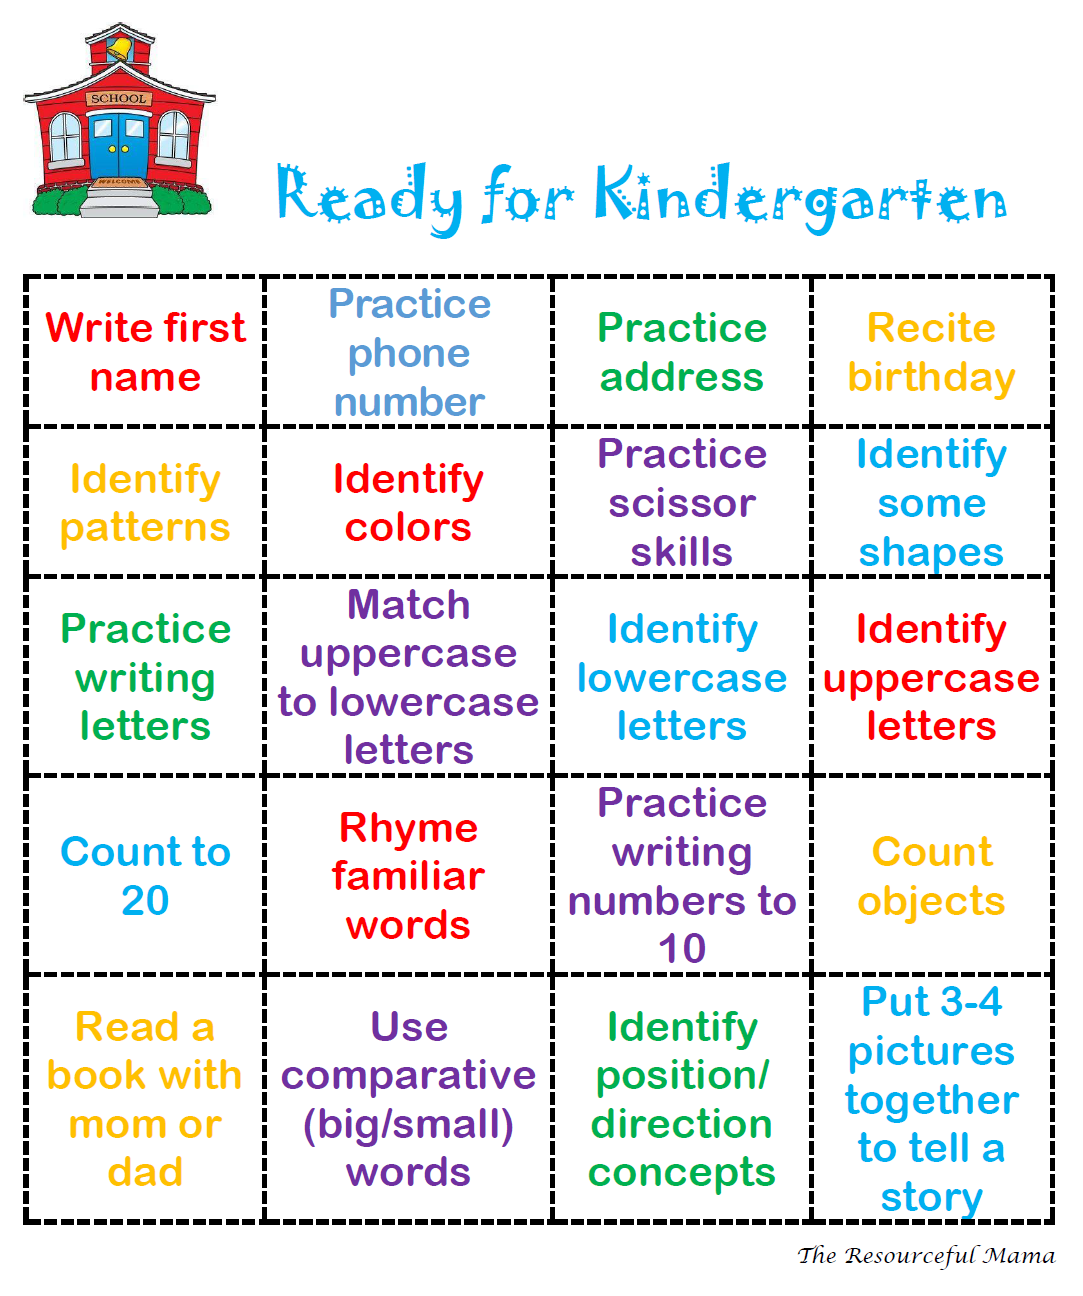 ready-for-kindergarten-bingo-the-resourceful-mama